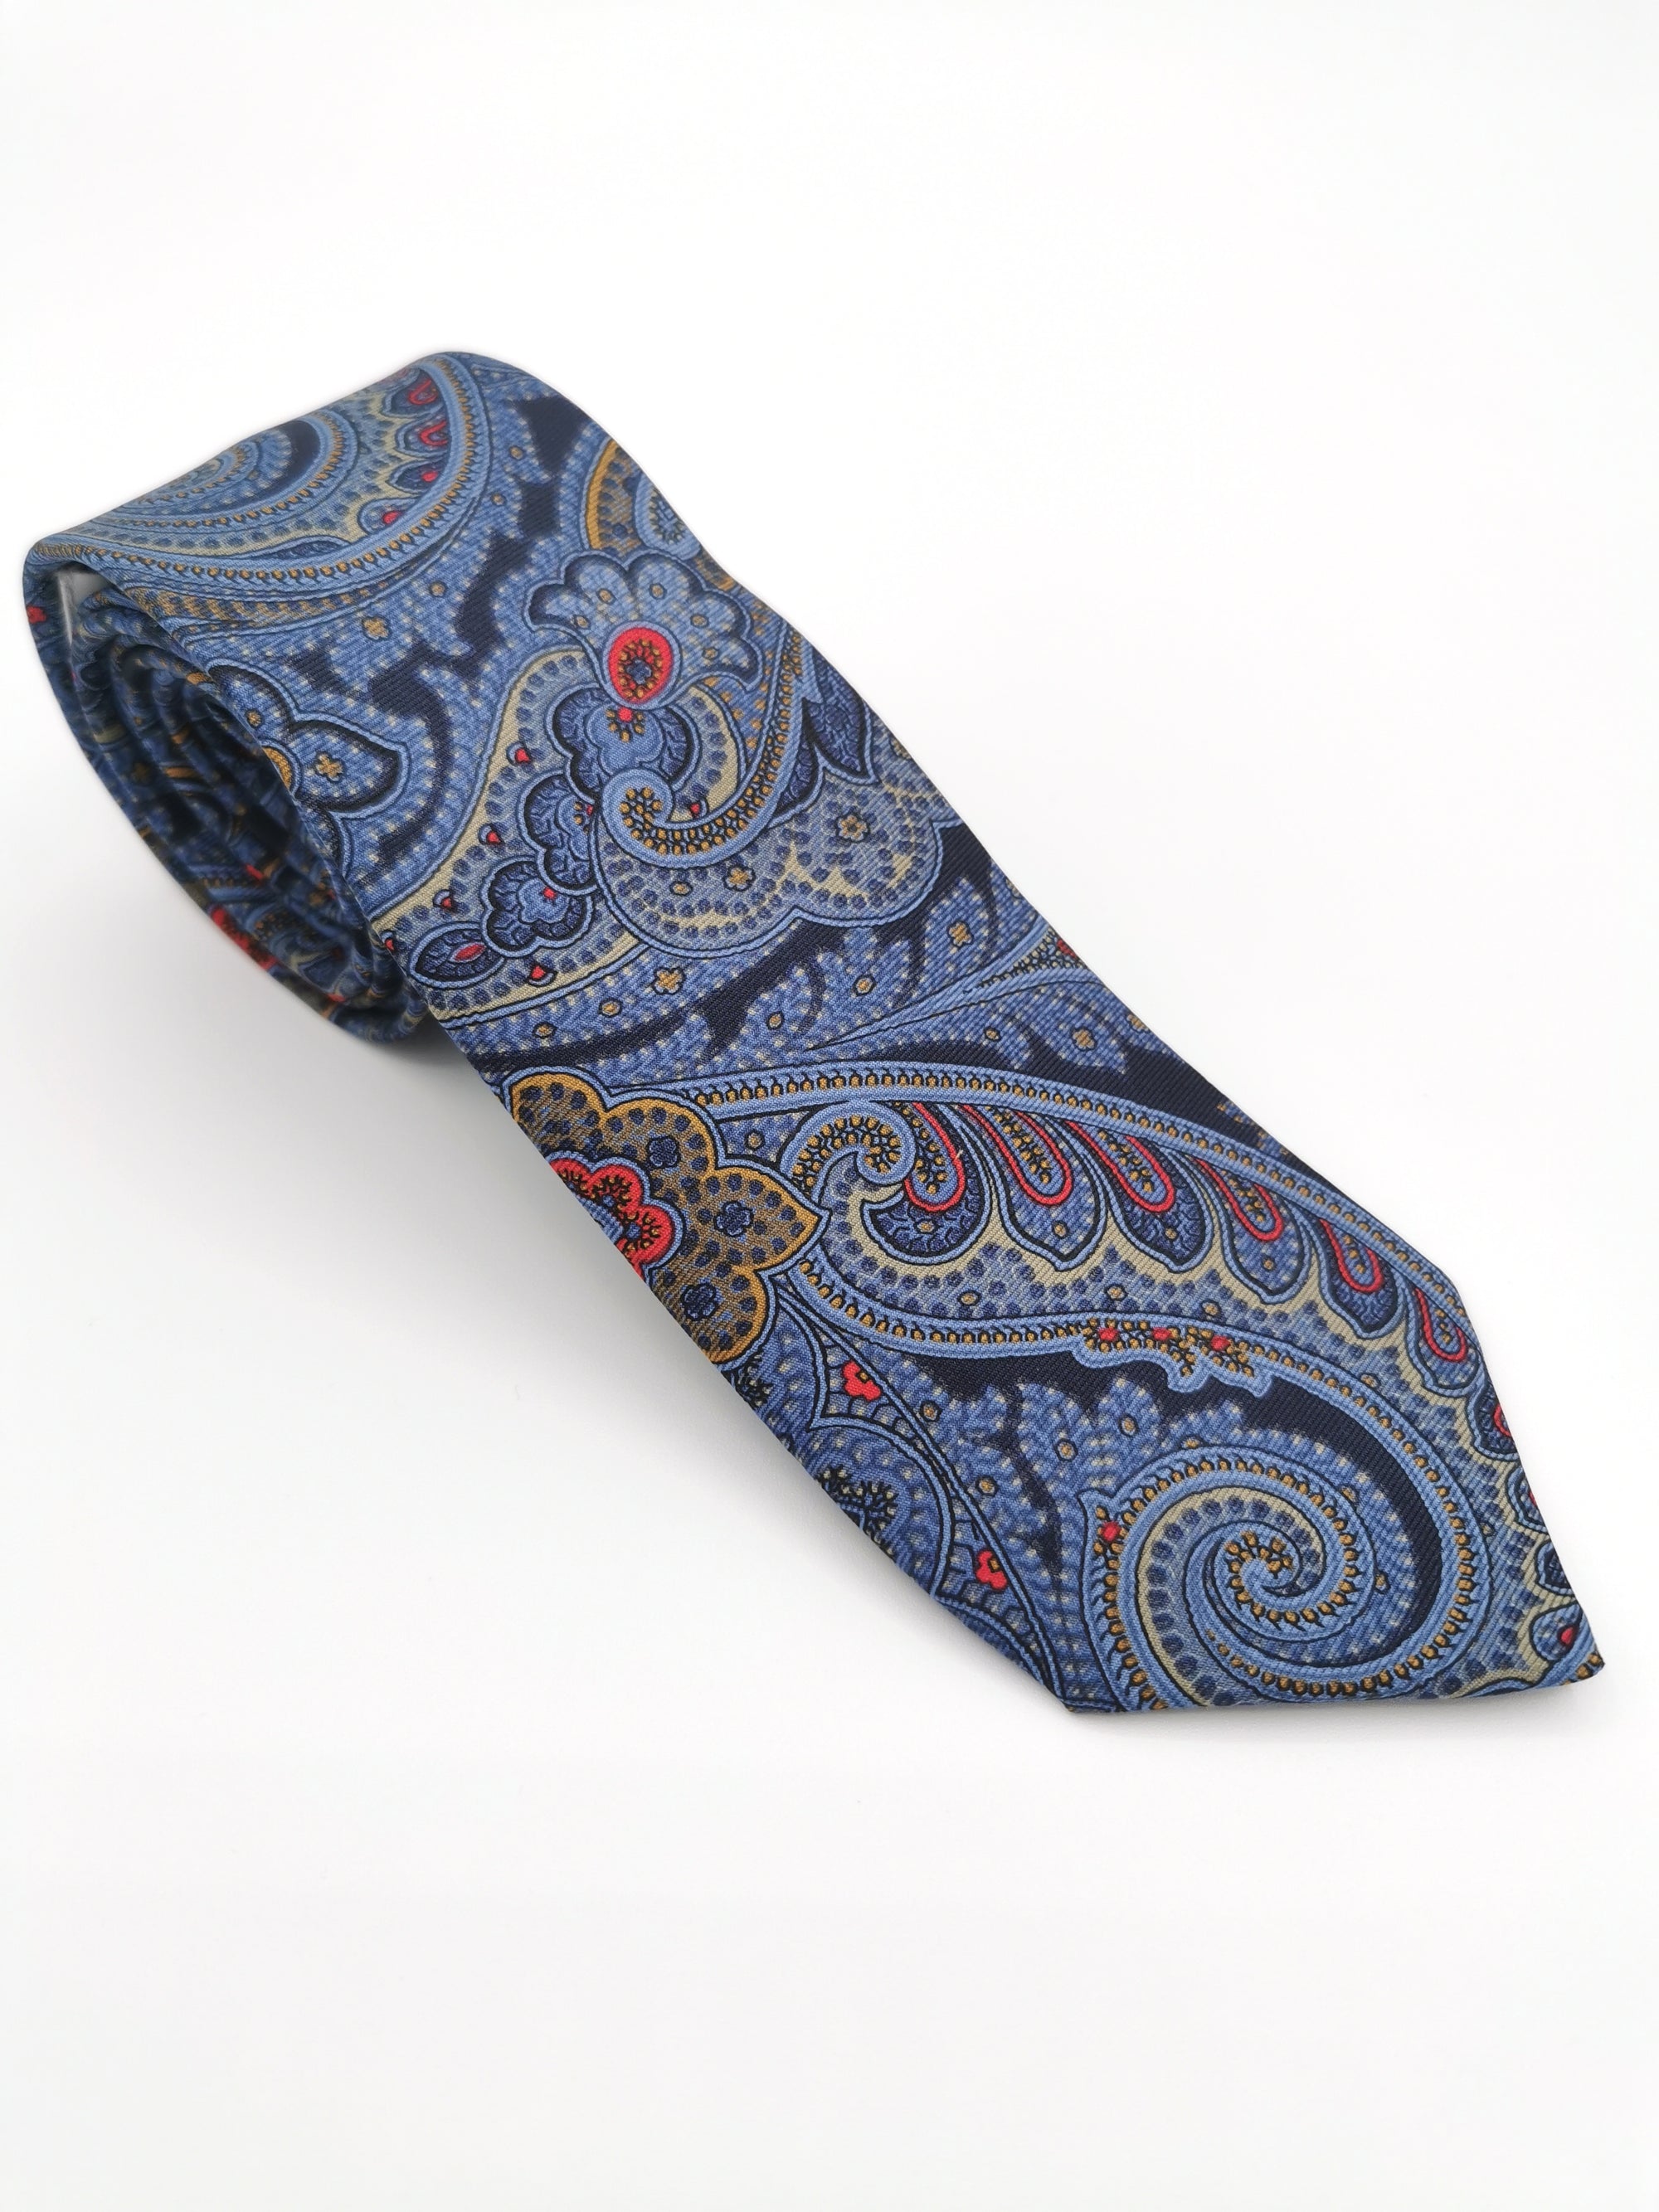 Ferala tie in blue silk with paisley pattern